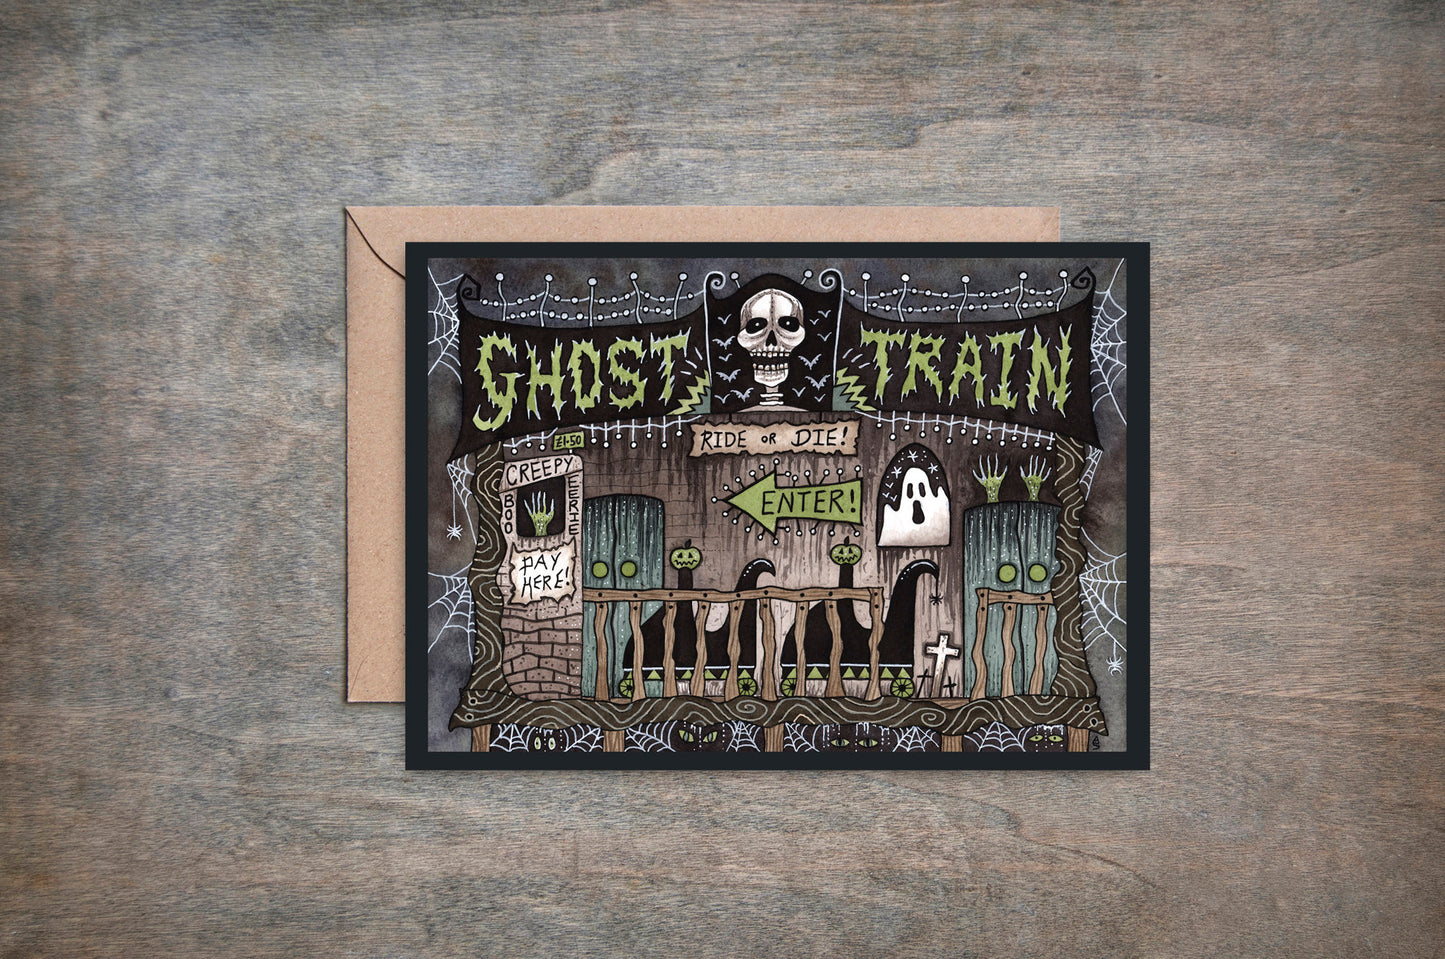 Ghost Train Greetings Card & Envelope - Spooky Funfair Horror Ride Illustrated Card - Vintage Retro Style Fairground Dark Ride Carnival Card